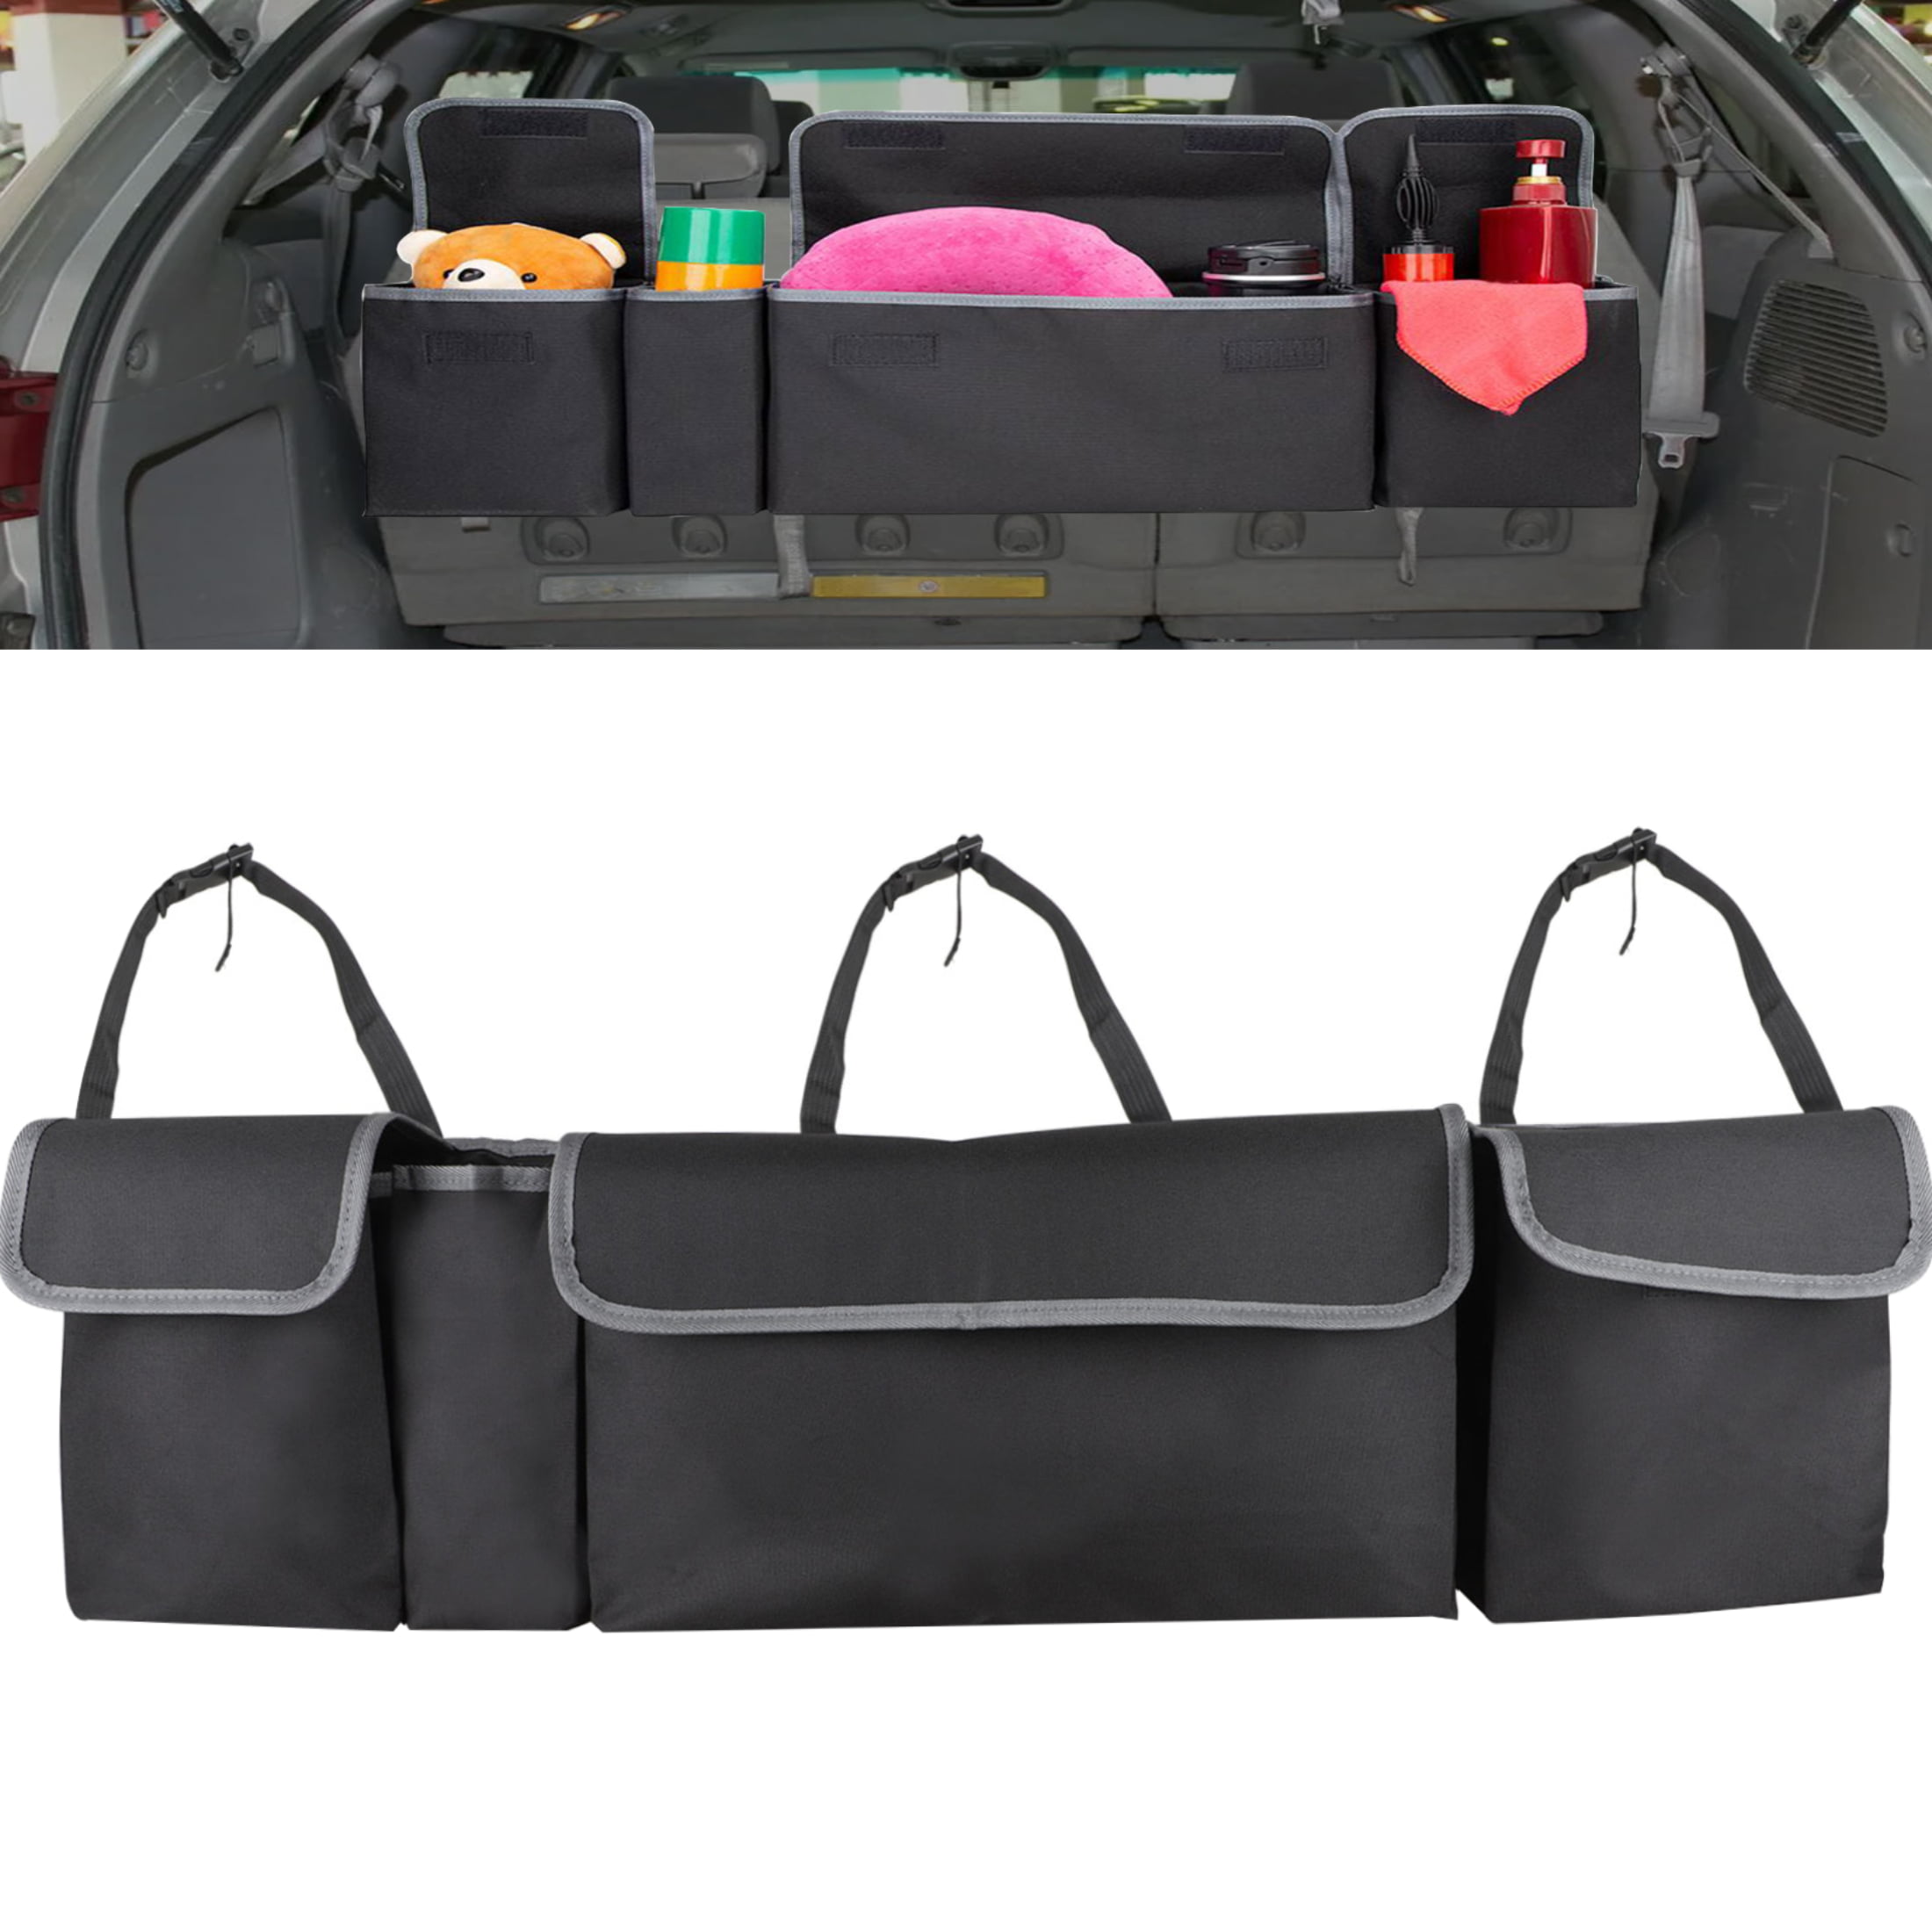 Backseat Organizer Store On The Go Essentials 6 Storage Pocket Organizers Car 